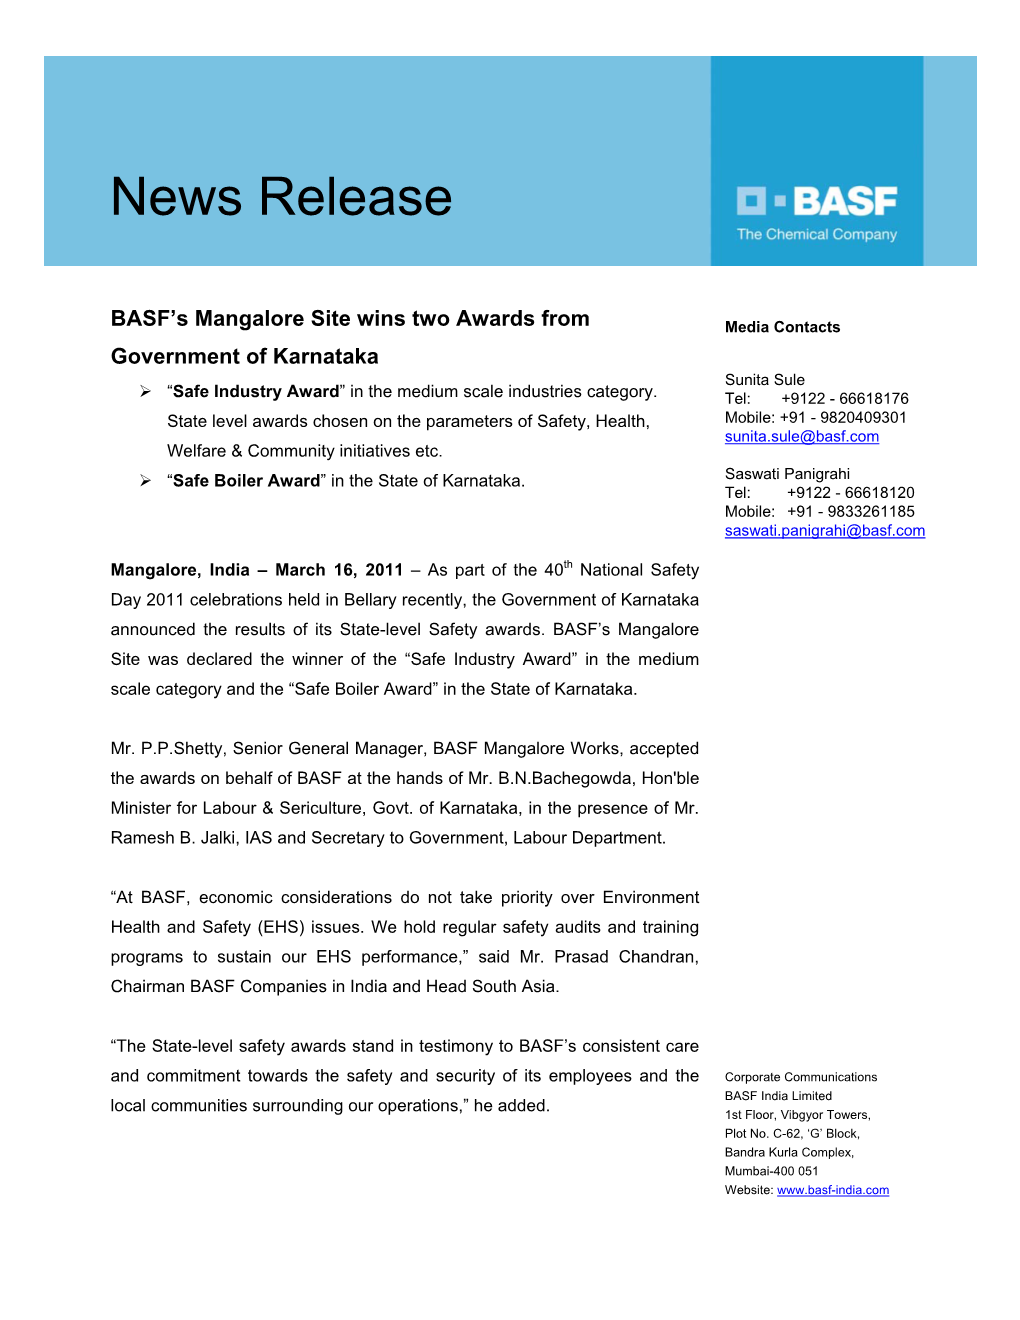 2011: BASF Mangalore Site Awards